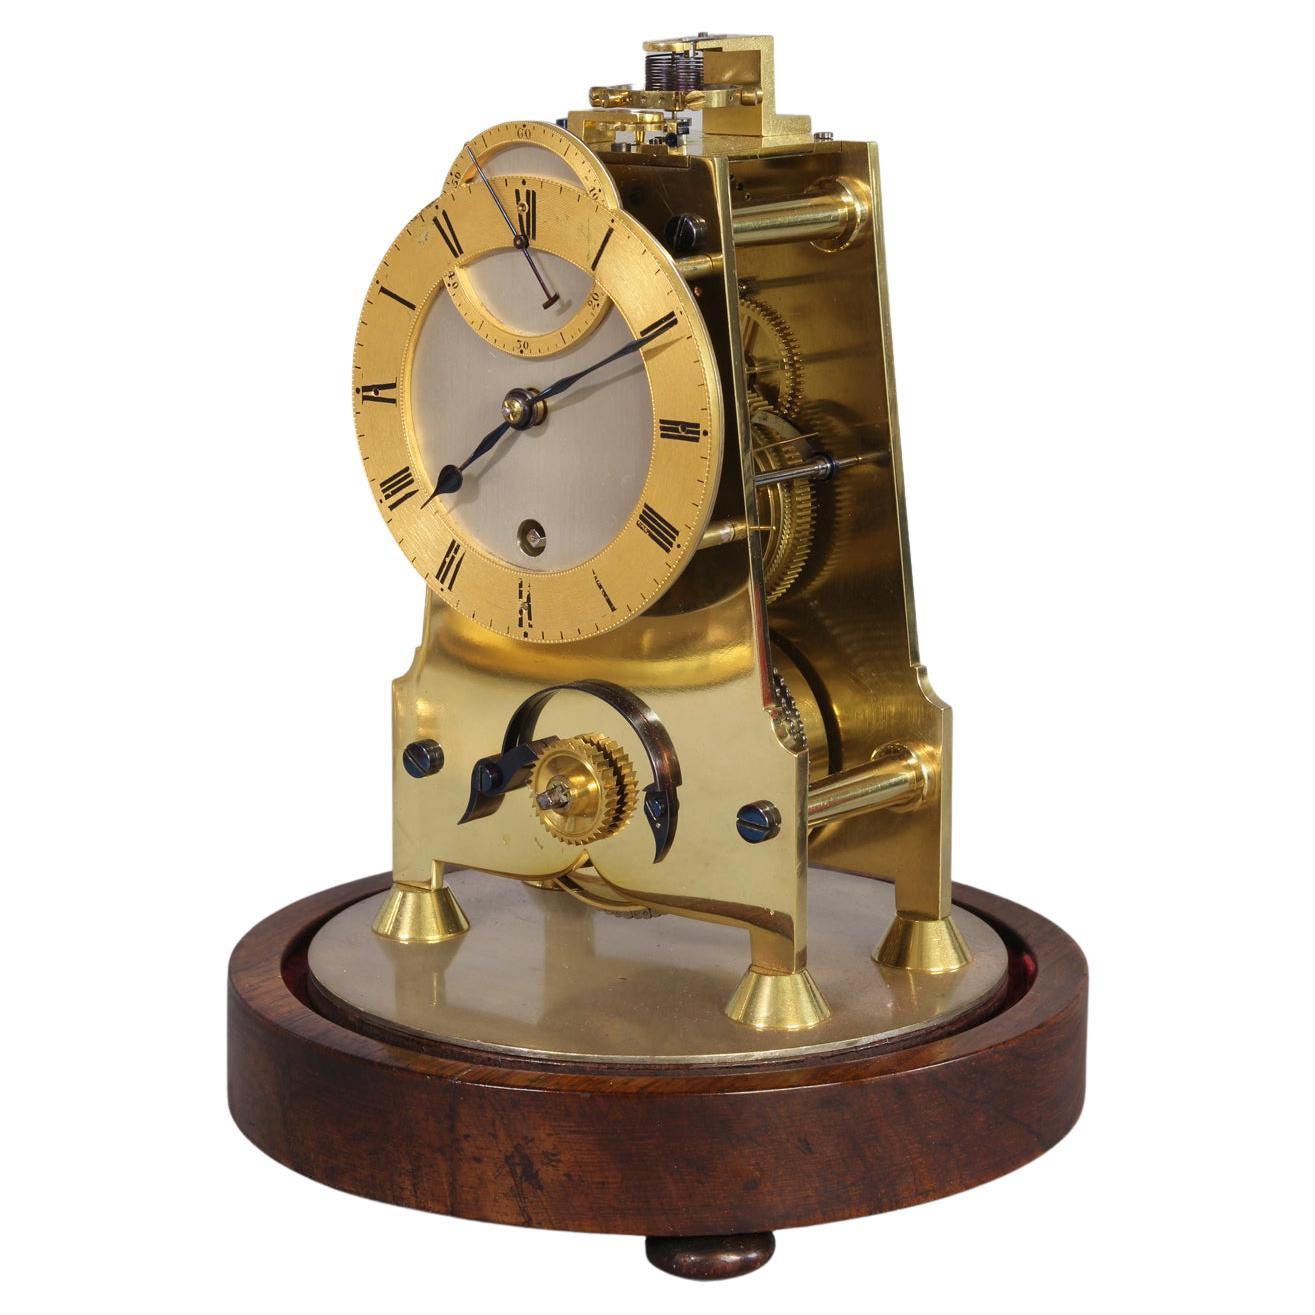 c.1840 English Mantle Chronometer Clock